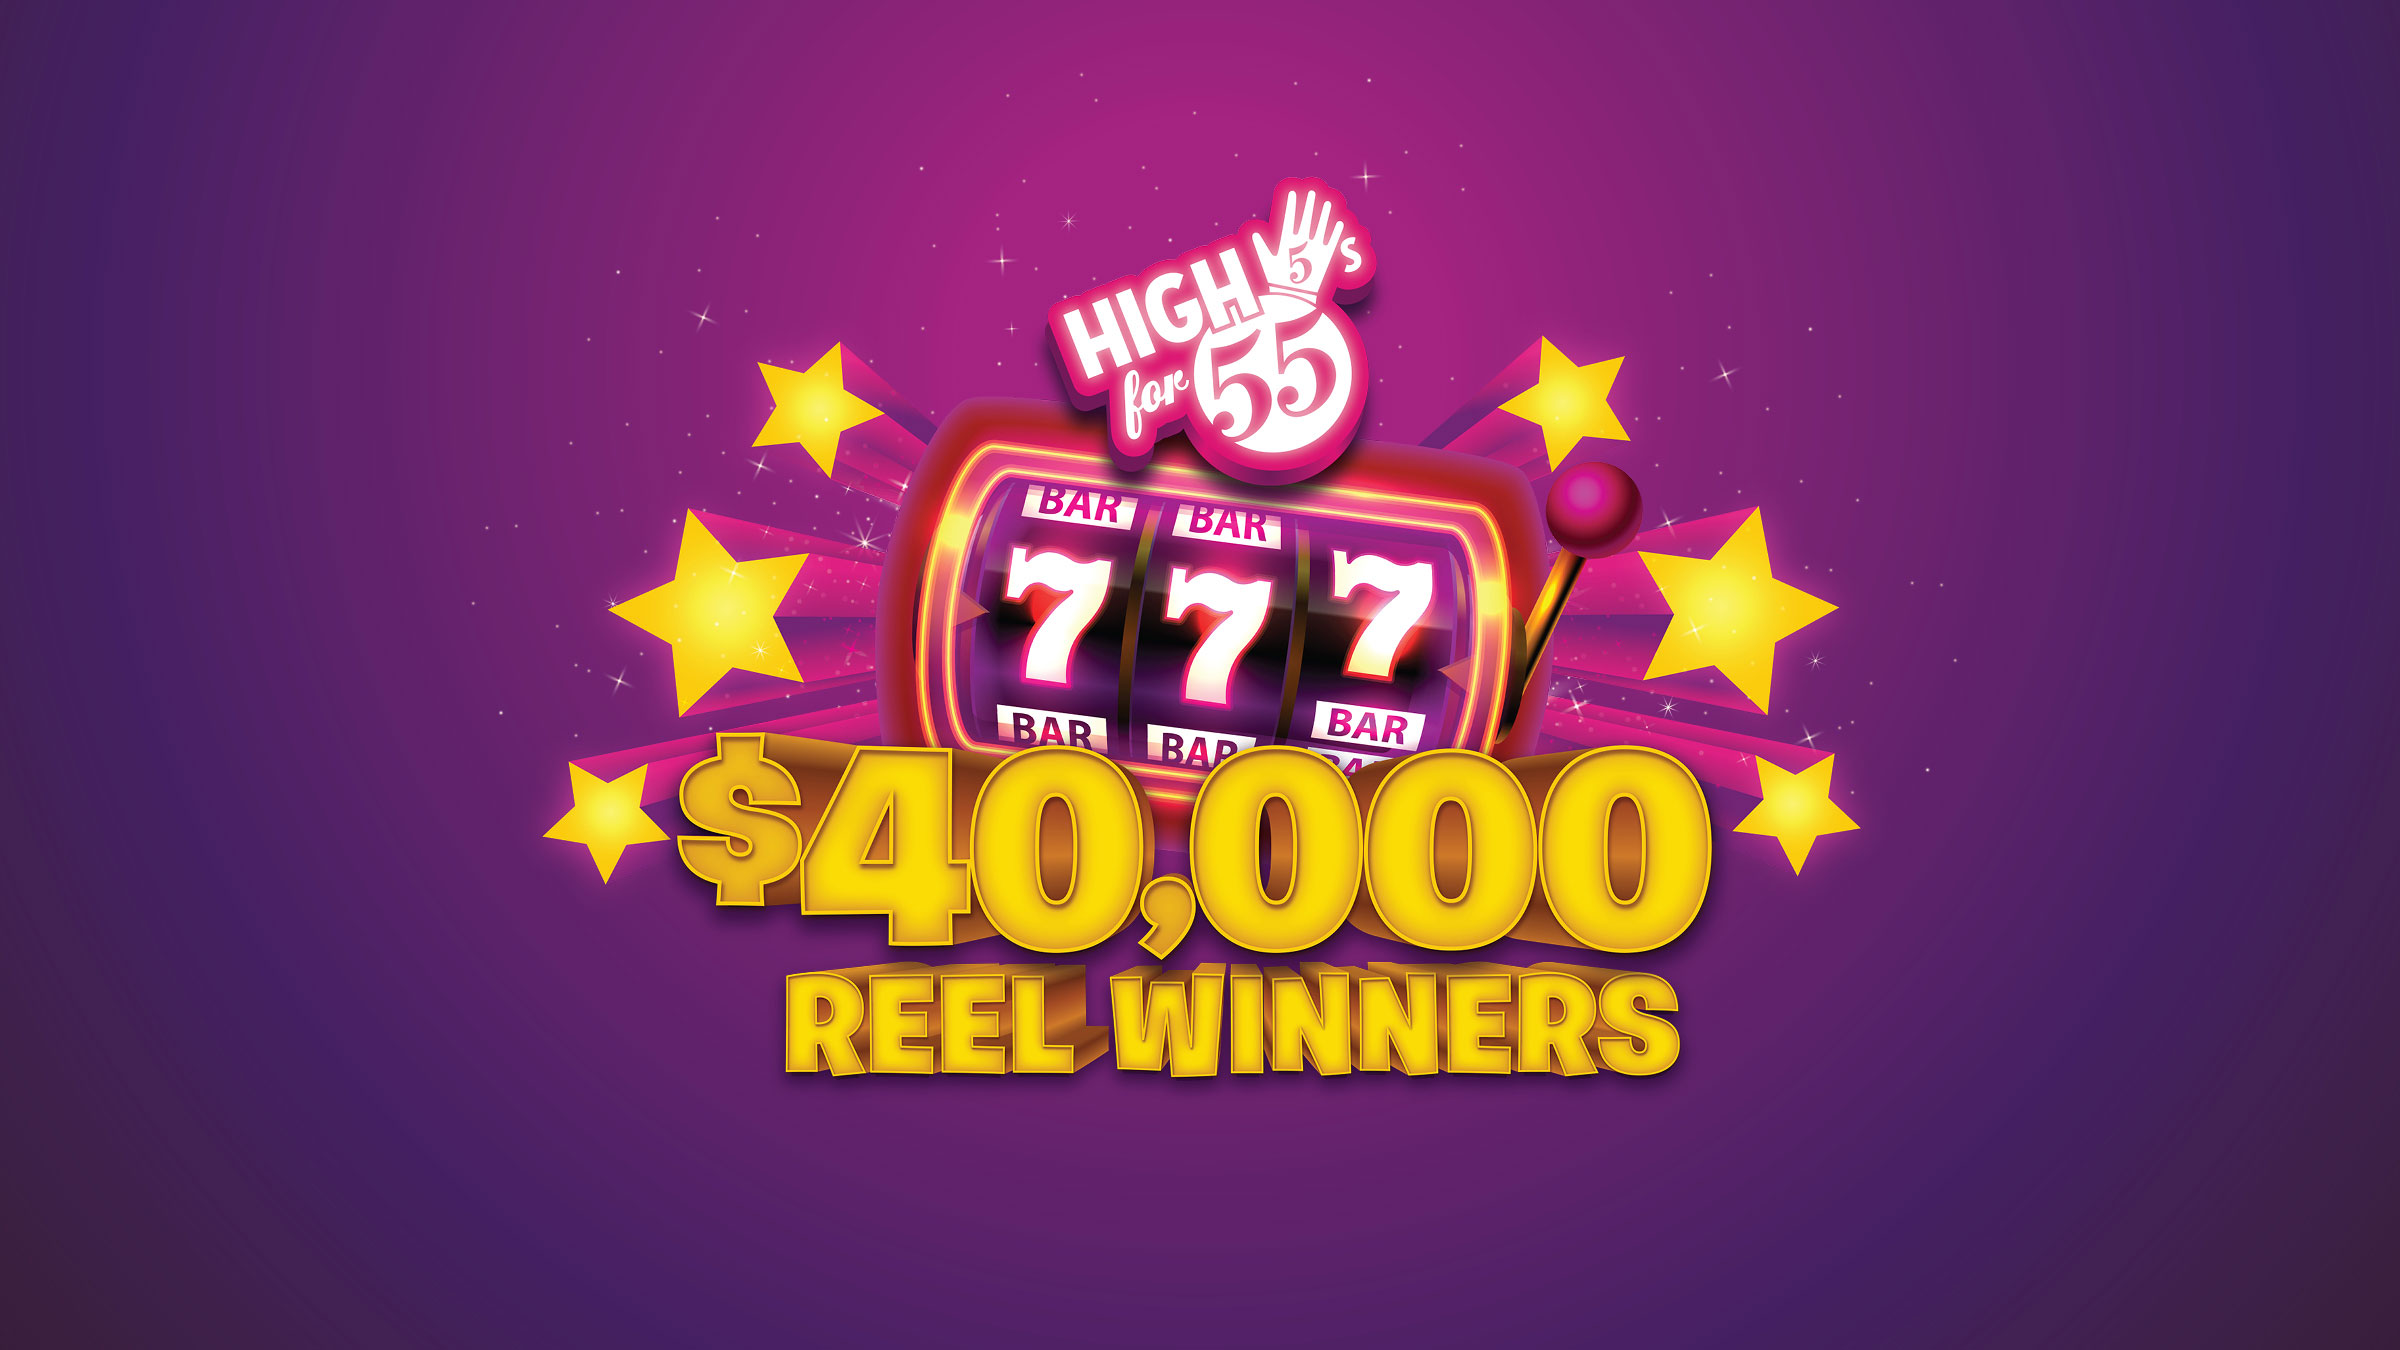 High 5s for 55s – $40,000 REEL WINNERS